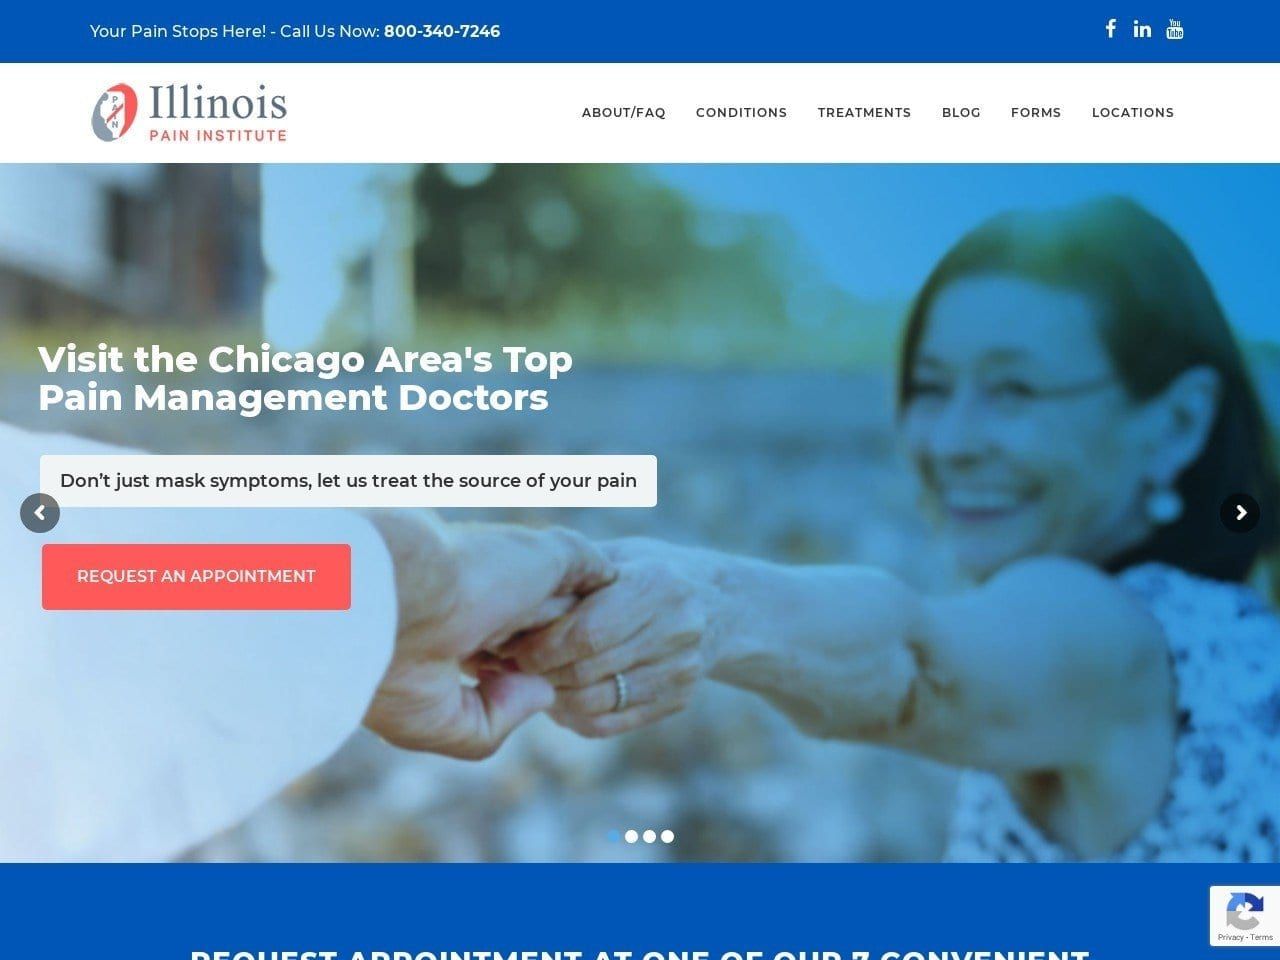 Illinois Pain Institute Website Screenshot from illinoispain.com